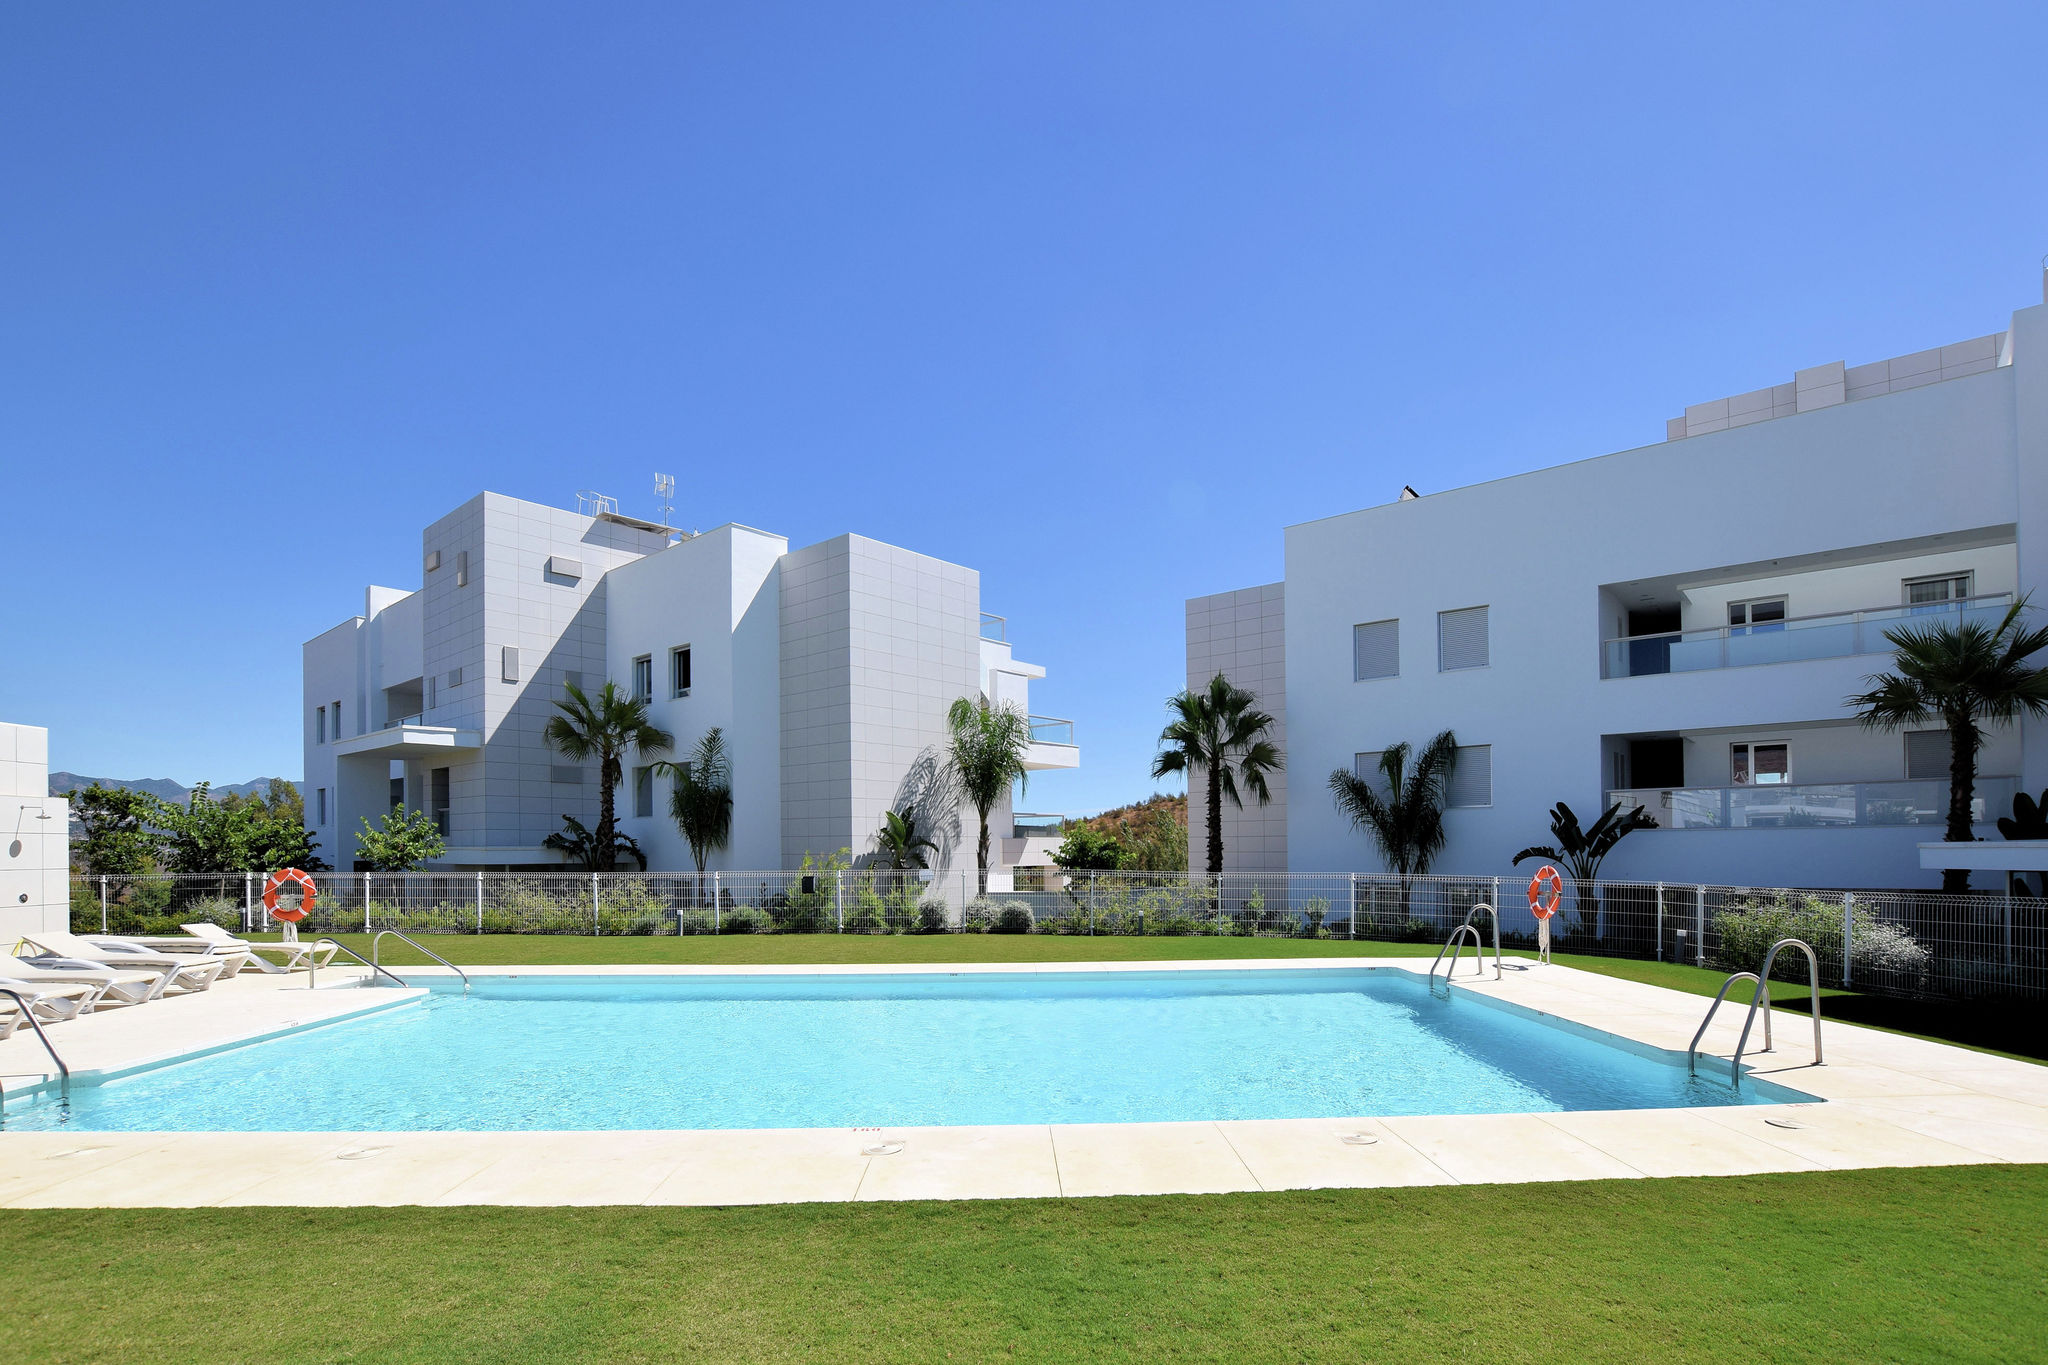 New luxury flat at La Cala Golf Resort near Mijas between Malaga & Marbella